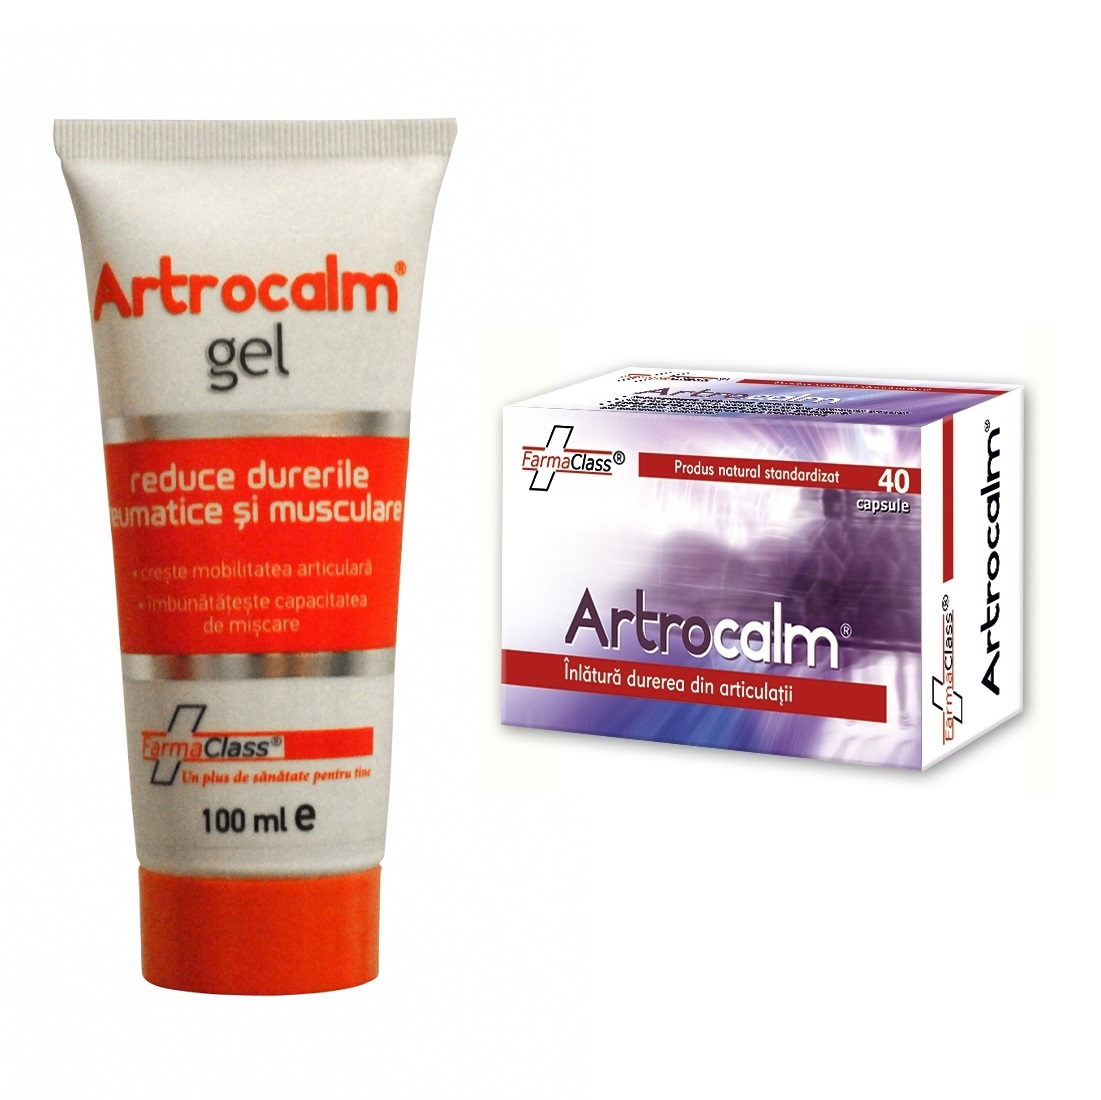 Pachet Artrocalm, 40 capsule + Artrocalm gel pentru dureri reumatice si musculare, 100 ml, FarmaClass